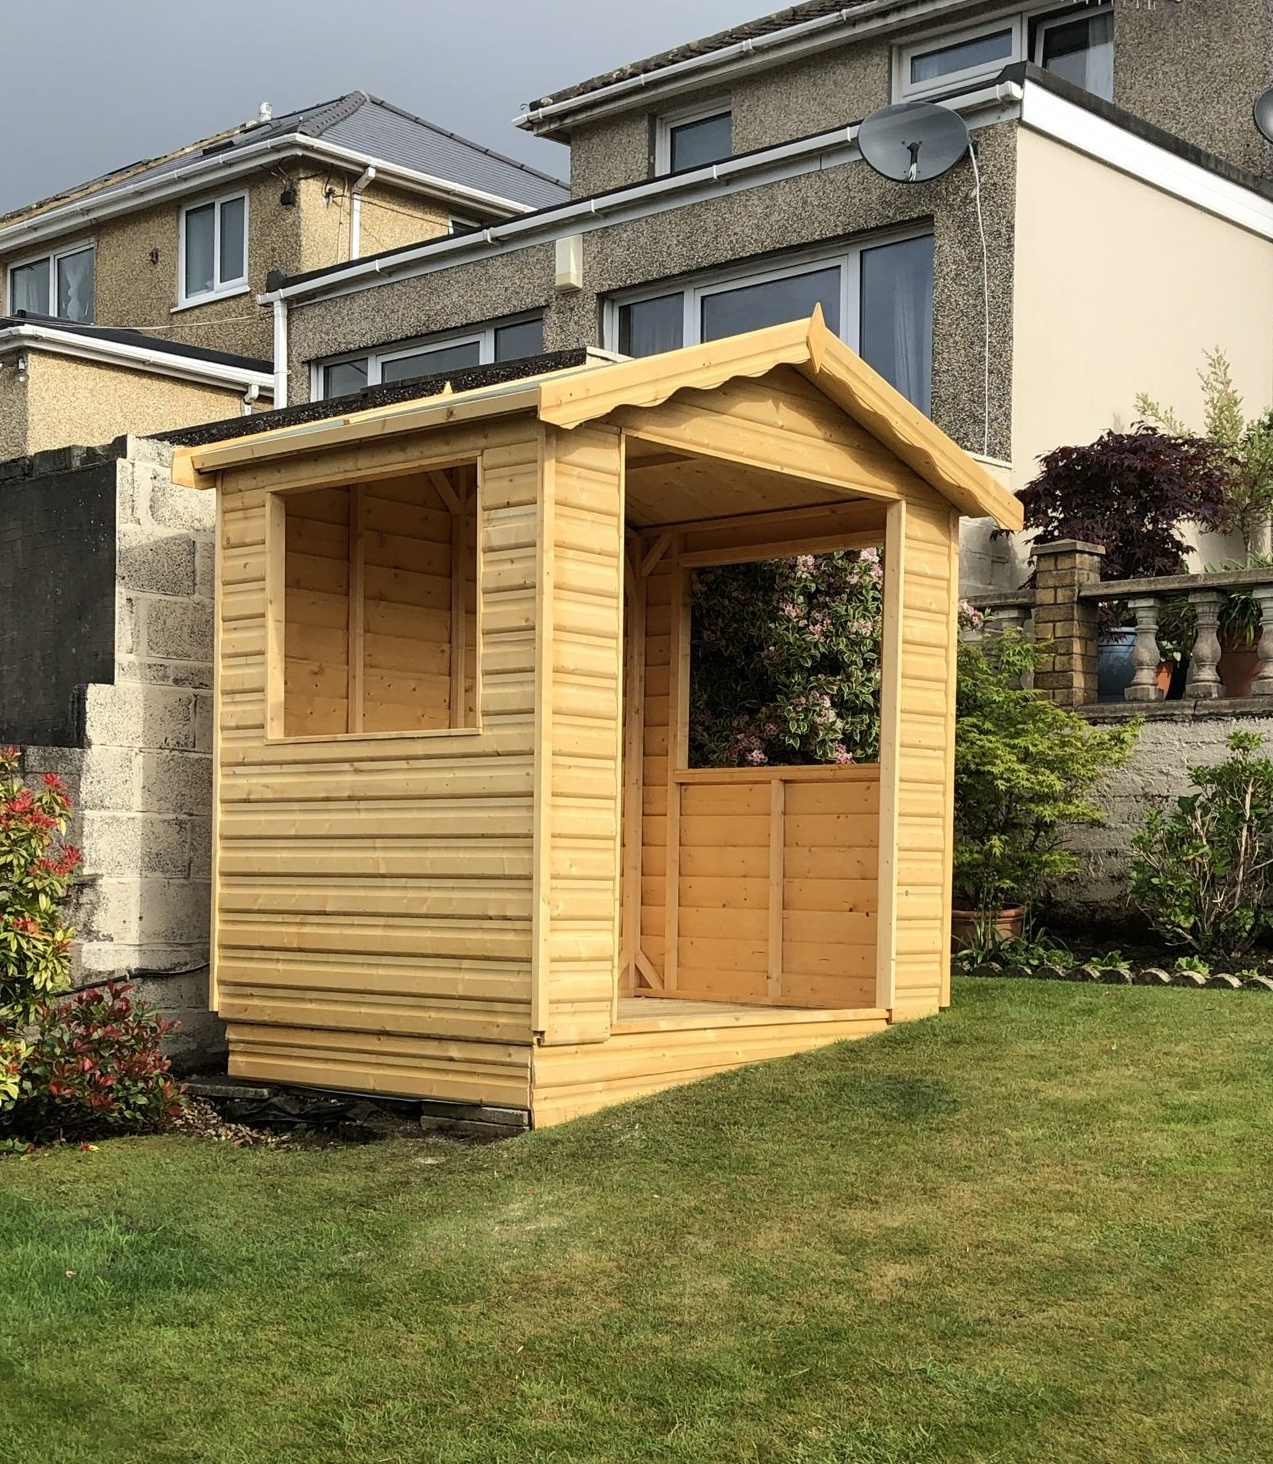 7' x 5' Apex Shelter for gardens. Budget building for the garden.